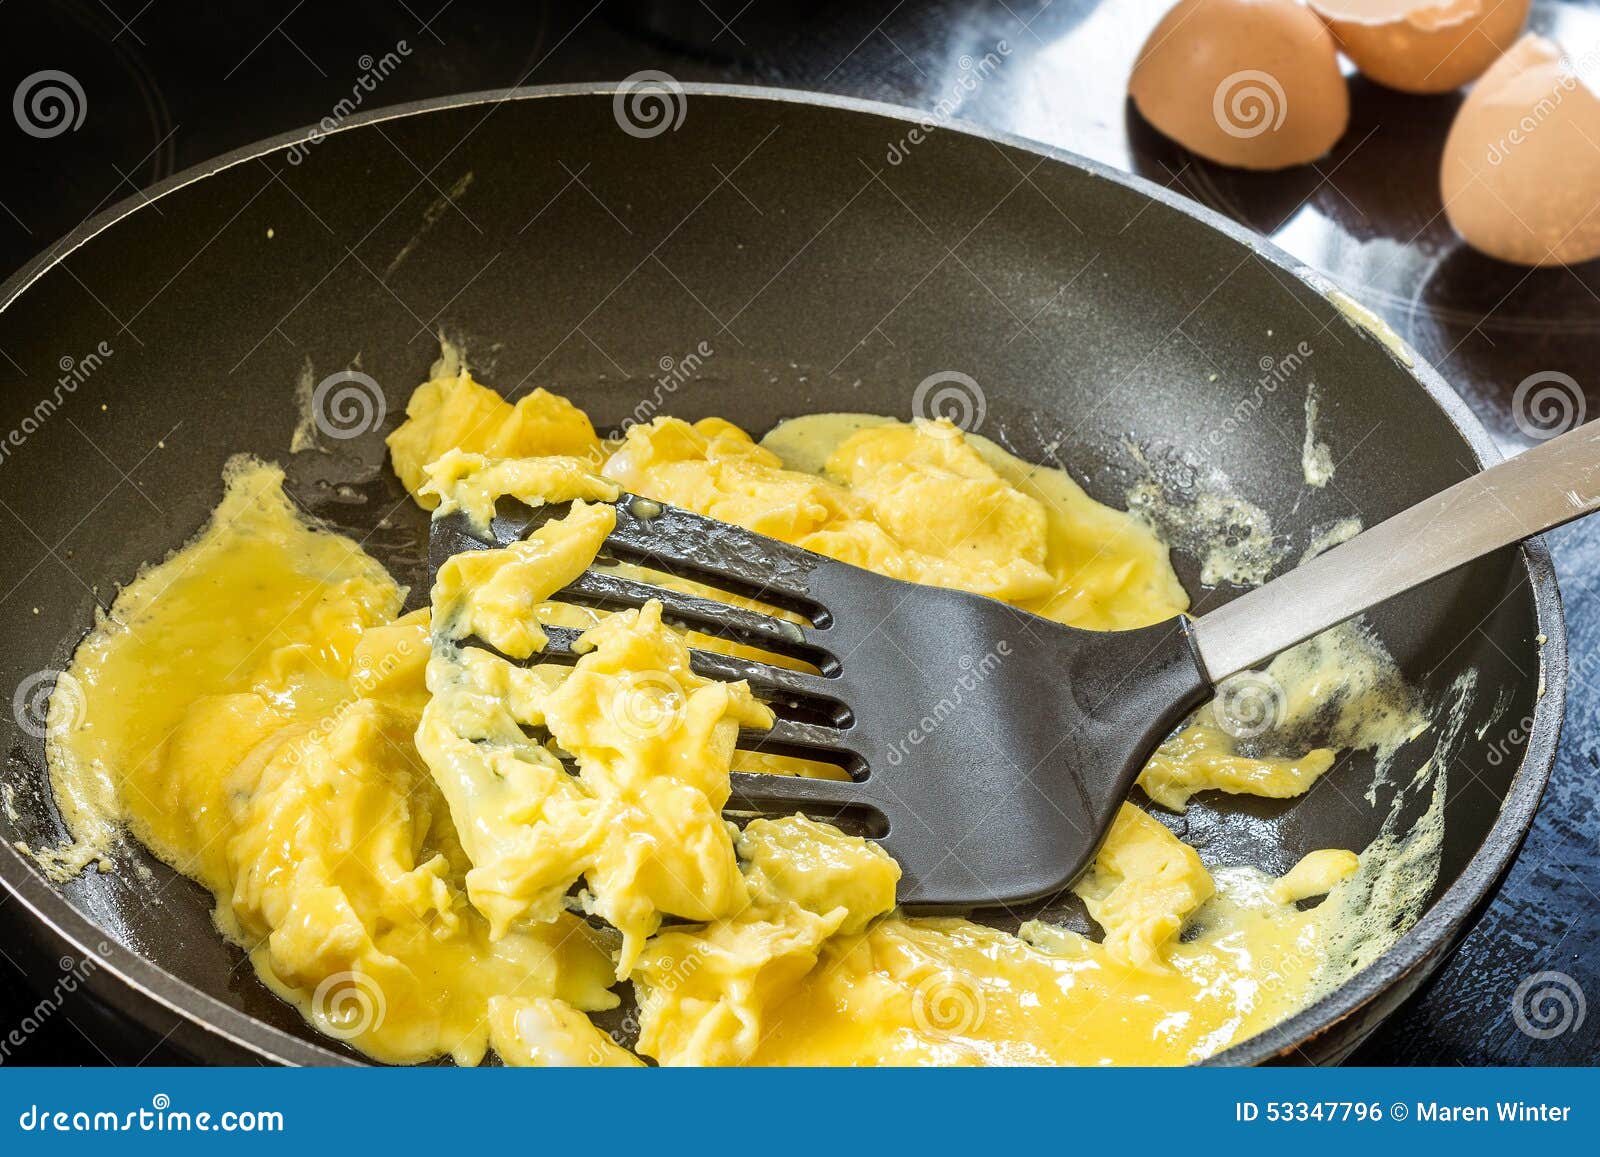 https://thumbs.dreamstime.com/z/frying-scrambled-eggs-pan-black-making-53347796.jpg